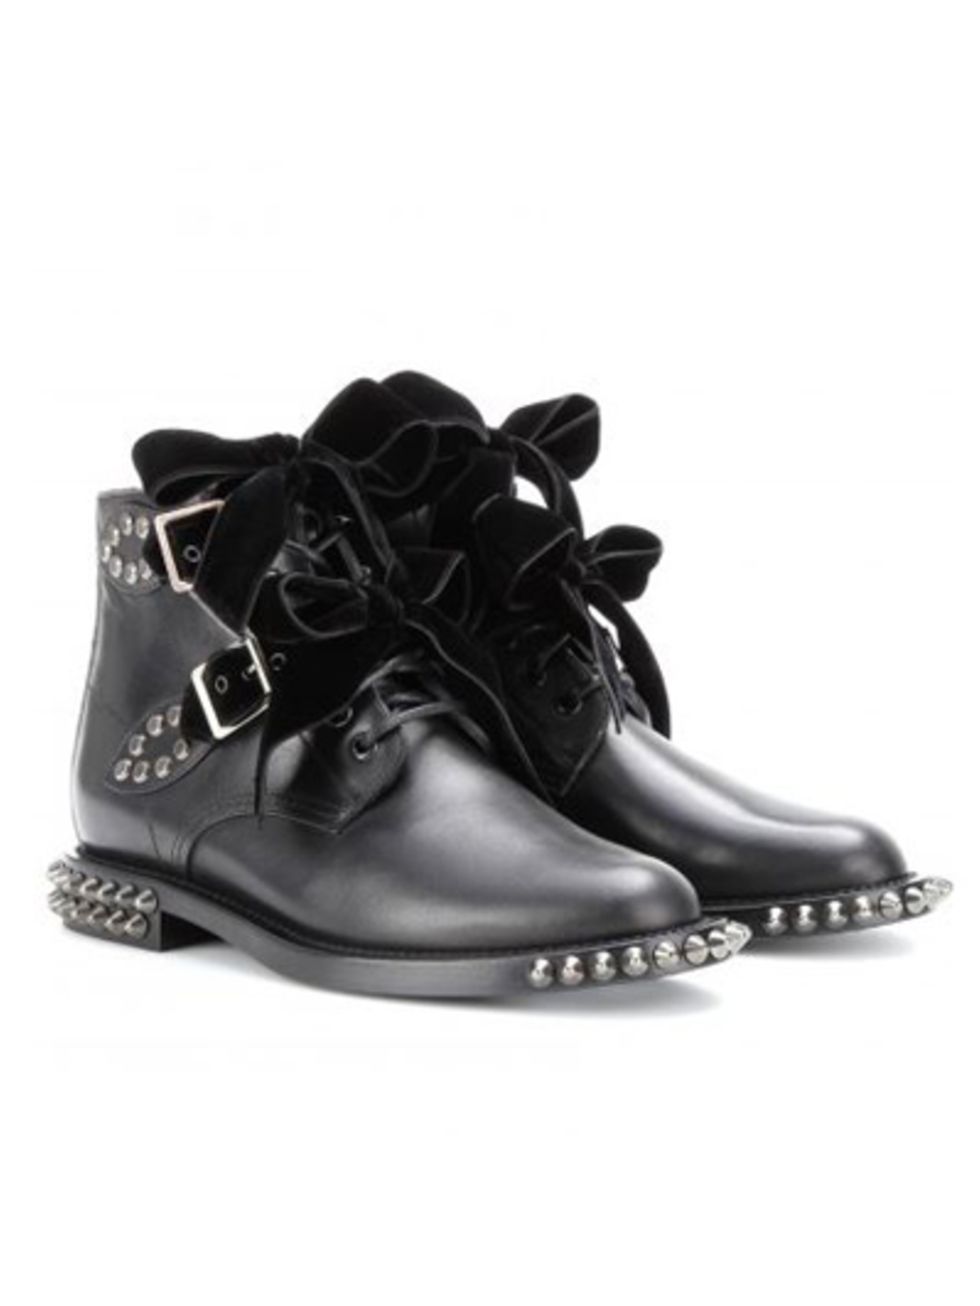 Footwear, White, Black, Grey, Leather, Dress shoe, Brand, Silver, Oxford shoe, Still life photography, 